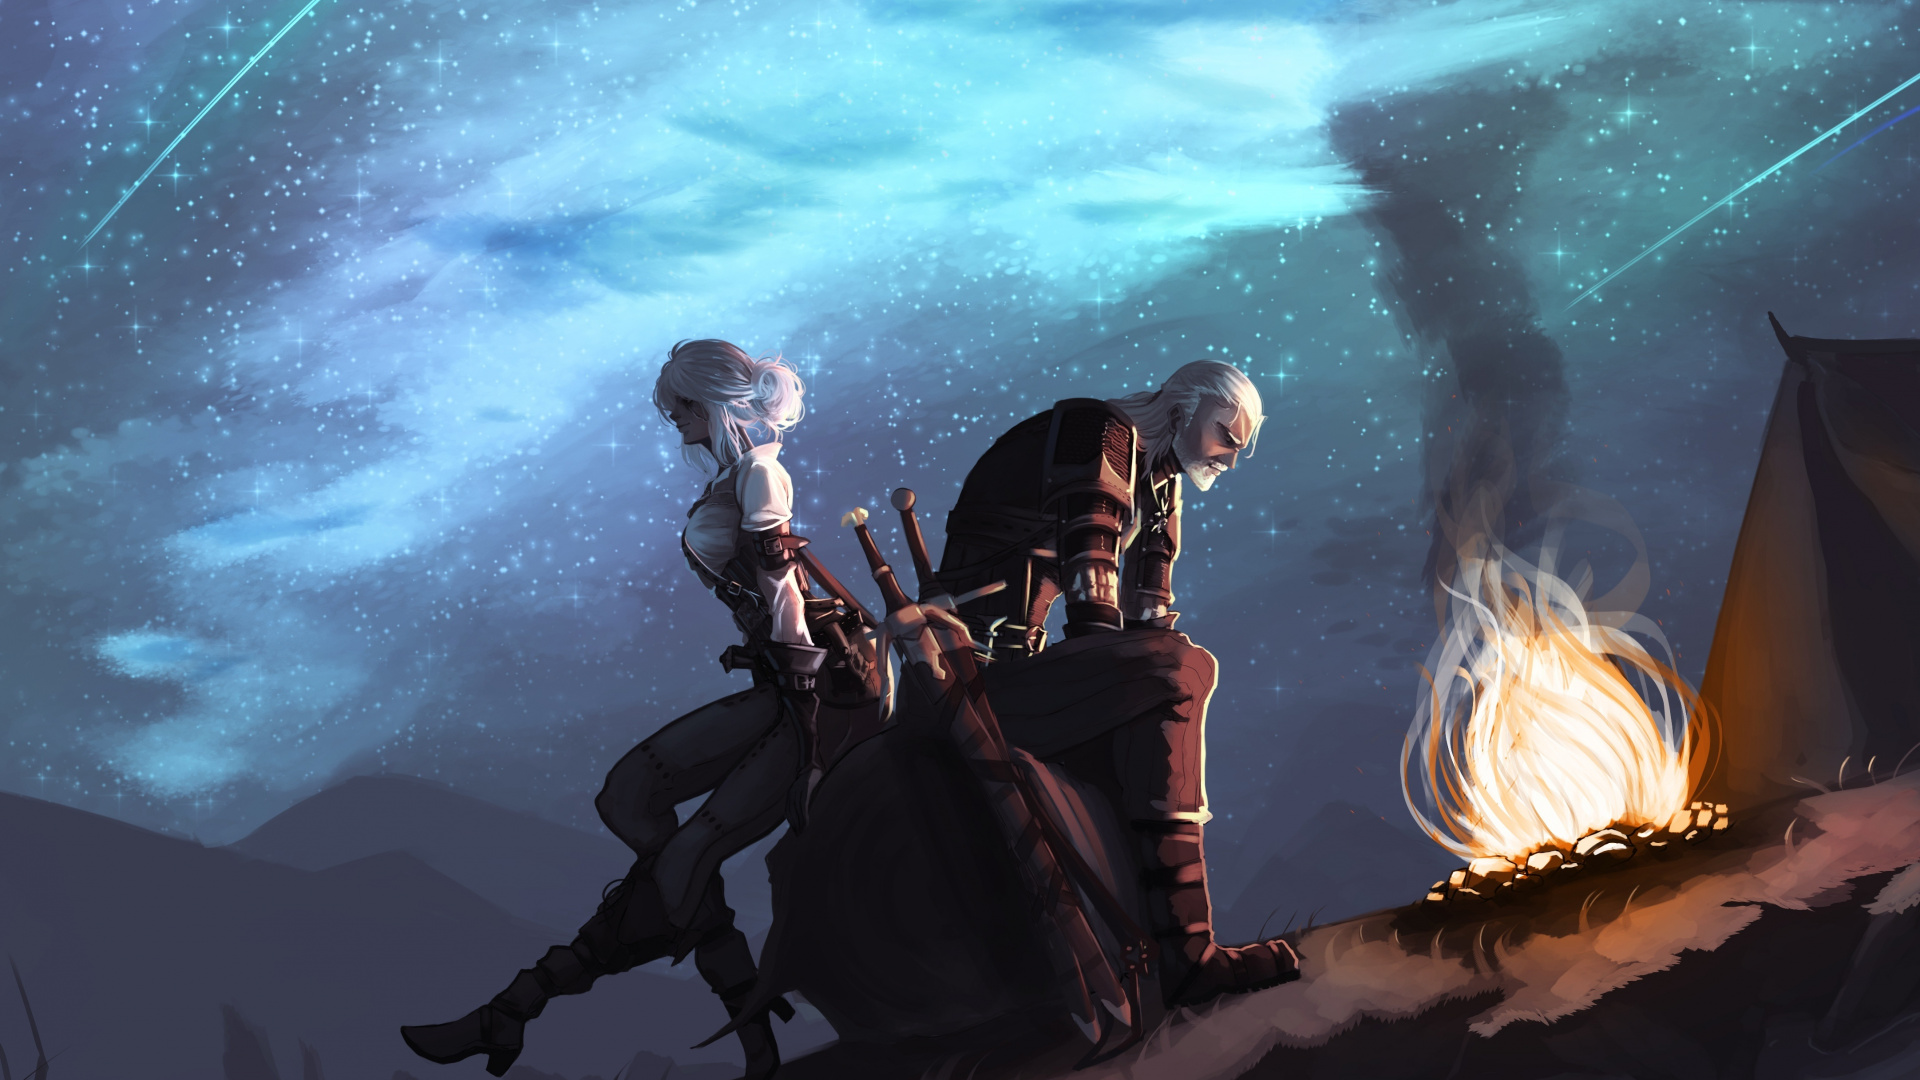 Geralt Of Rivia And Ciri, The Witcher, Fan Art, Wallpaper - Geralt And Ciri Fanart - HD Wallpaper 